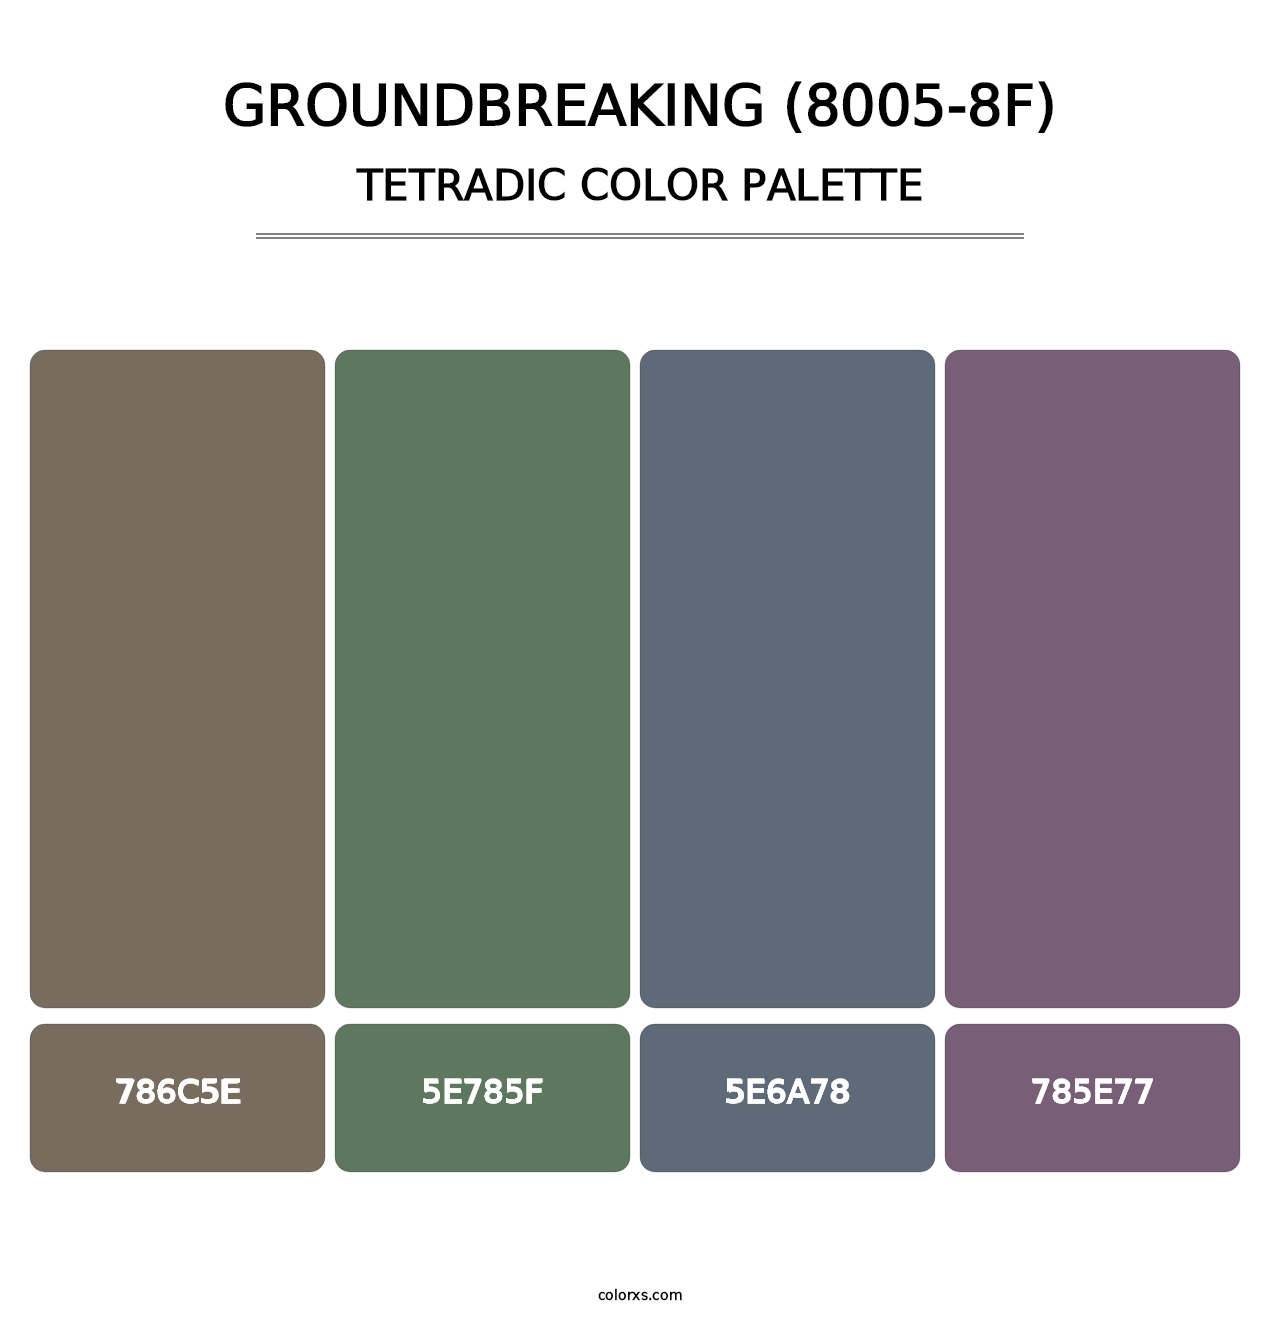 Groundbreaking (8005-8F) - Tetradic Color Palette